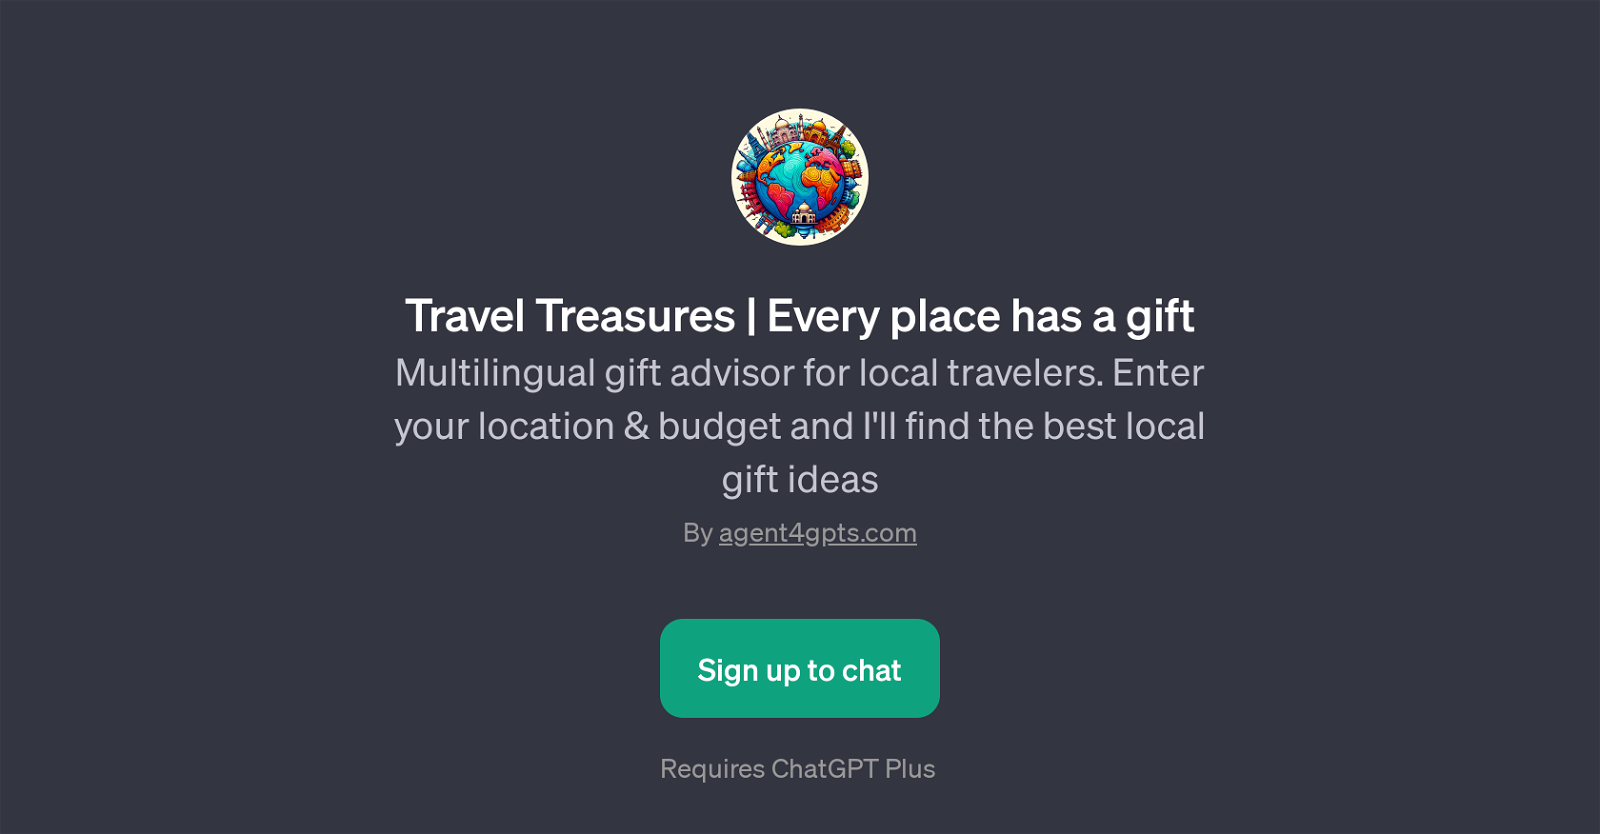 Travel Treasures website